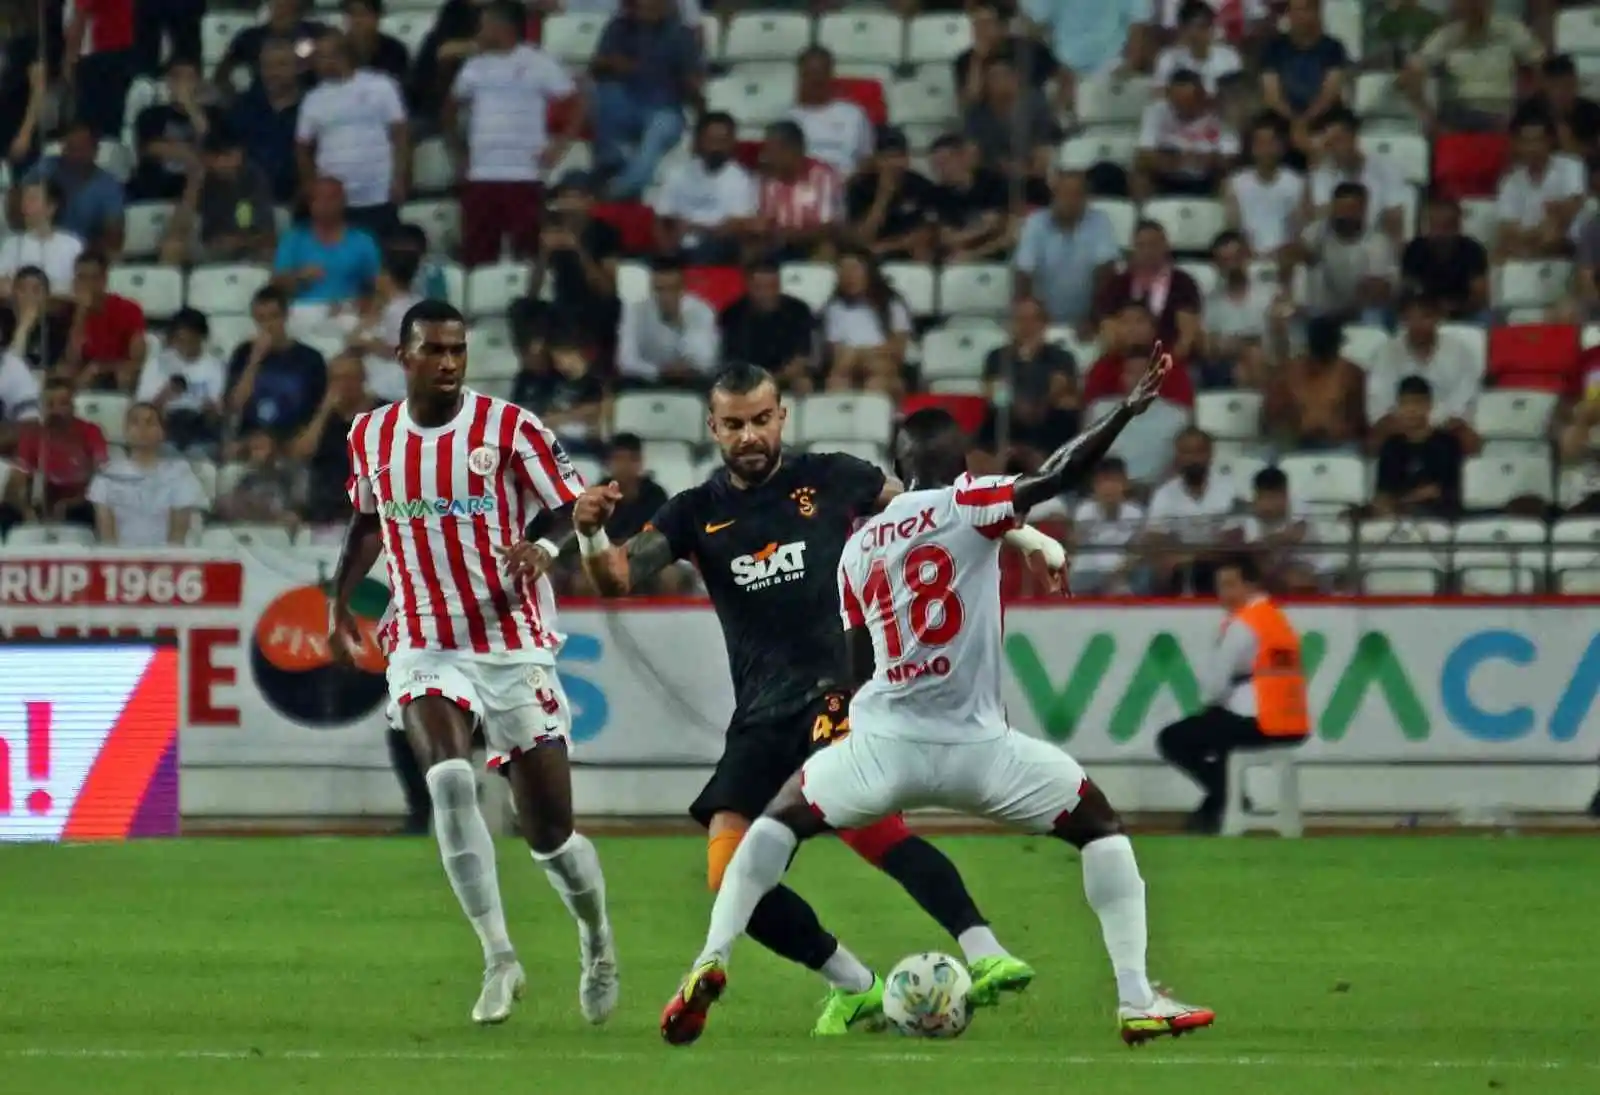 Spor Toto Süper Lig: FT Antalyaspor: 0 - Galatasaray: 0 (İlk yarı)
